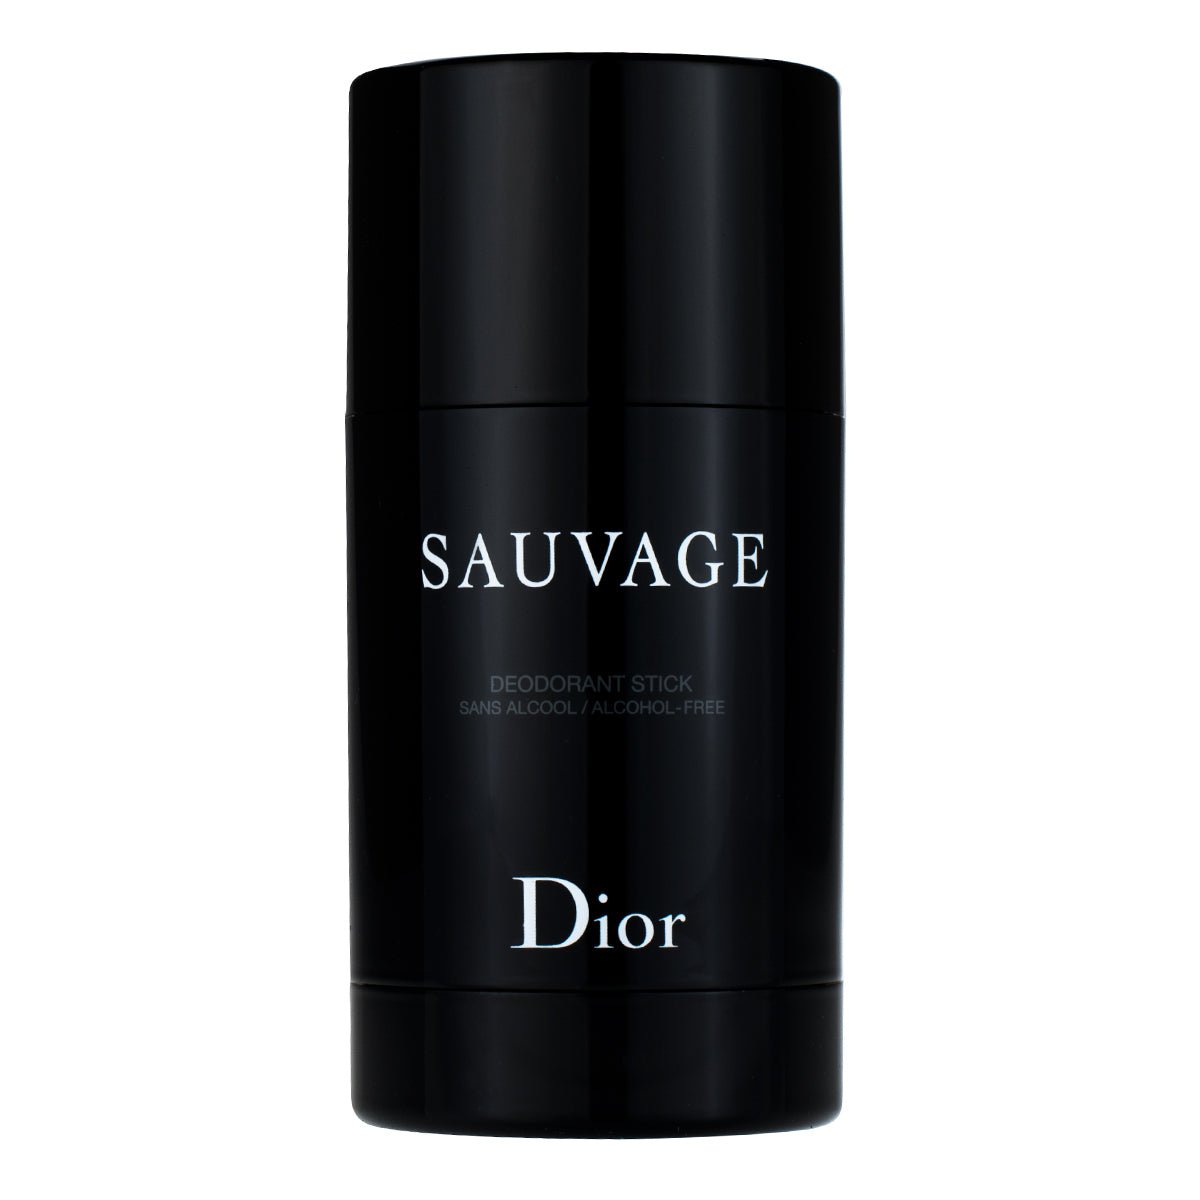 Christian Dior Sauvage Deodorant Stick 75g - AllurebeautypkChristian Dior Sauvage Deodorant Stick 75g